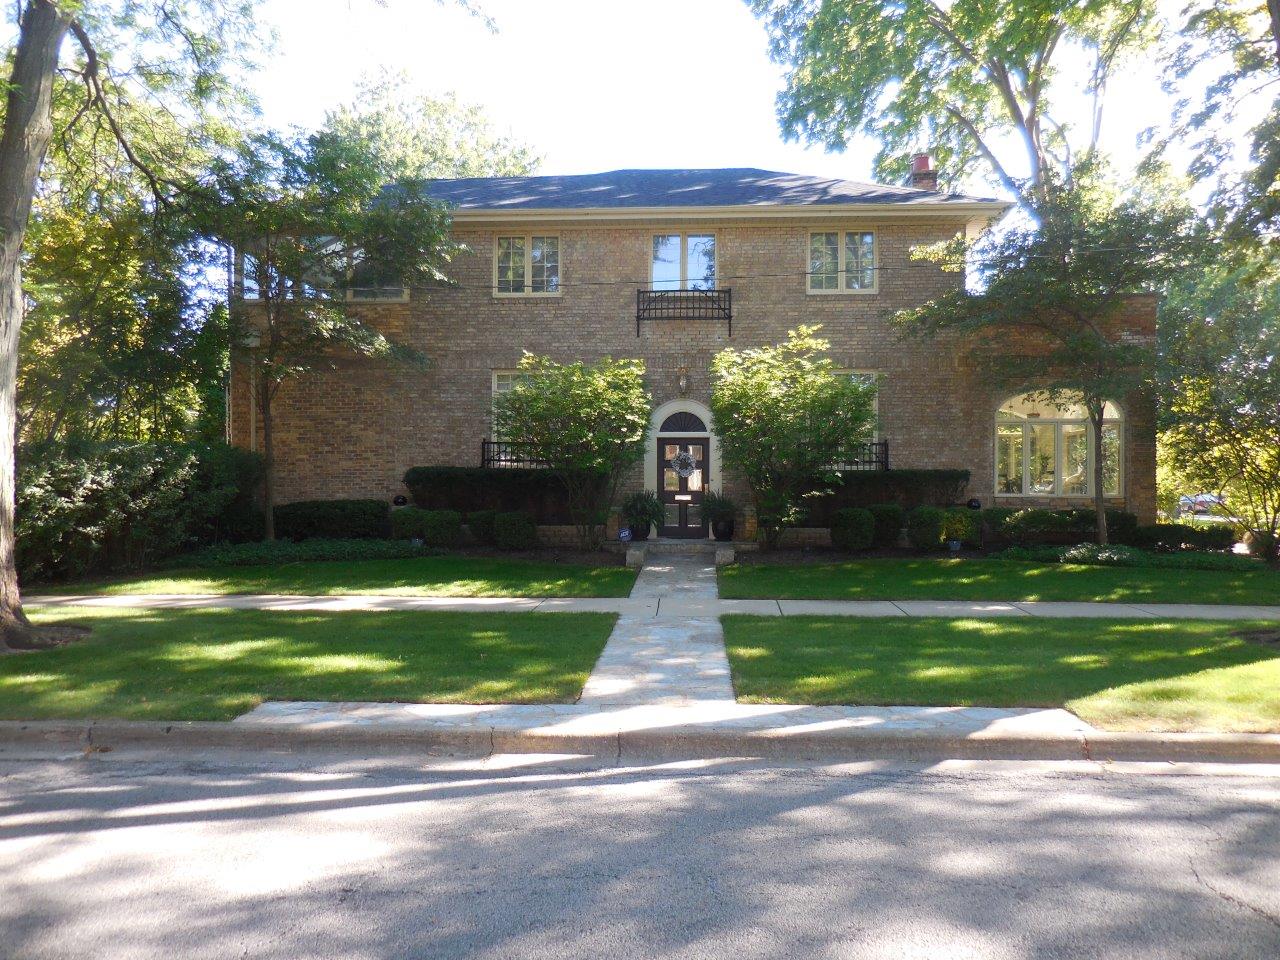 Hillary Rodham Clinton childhood house in Park Ridge, Illinois